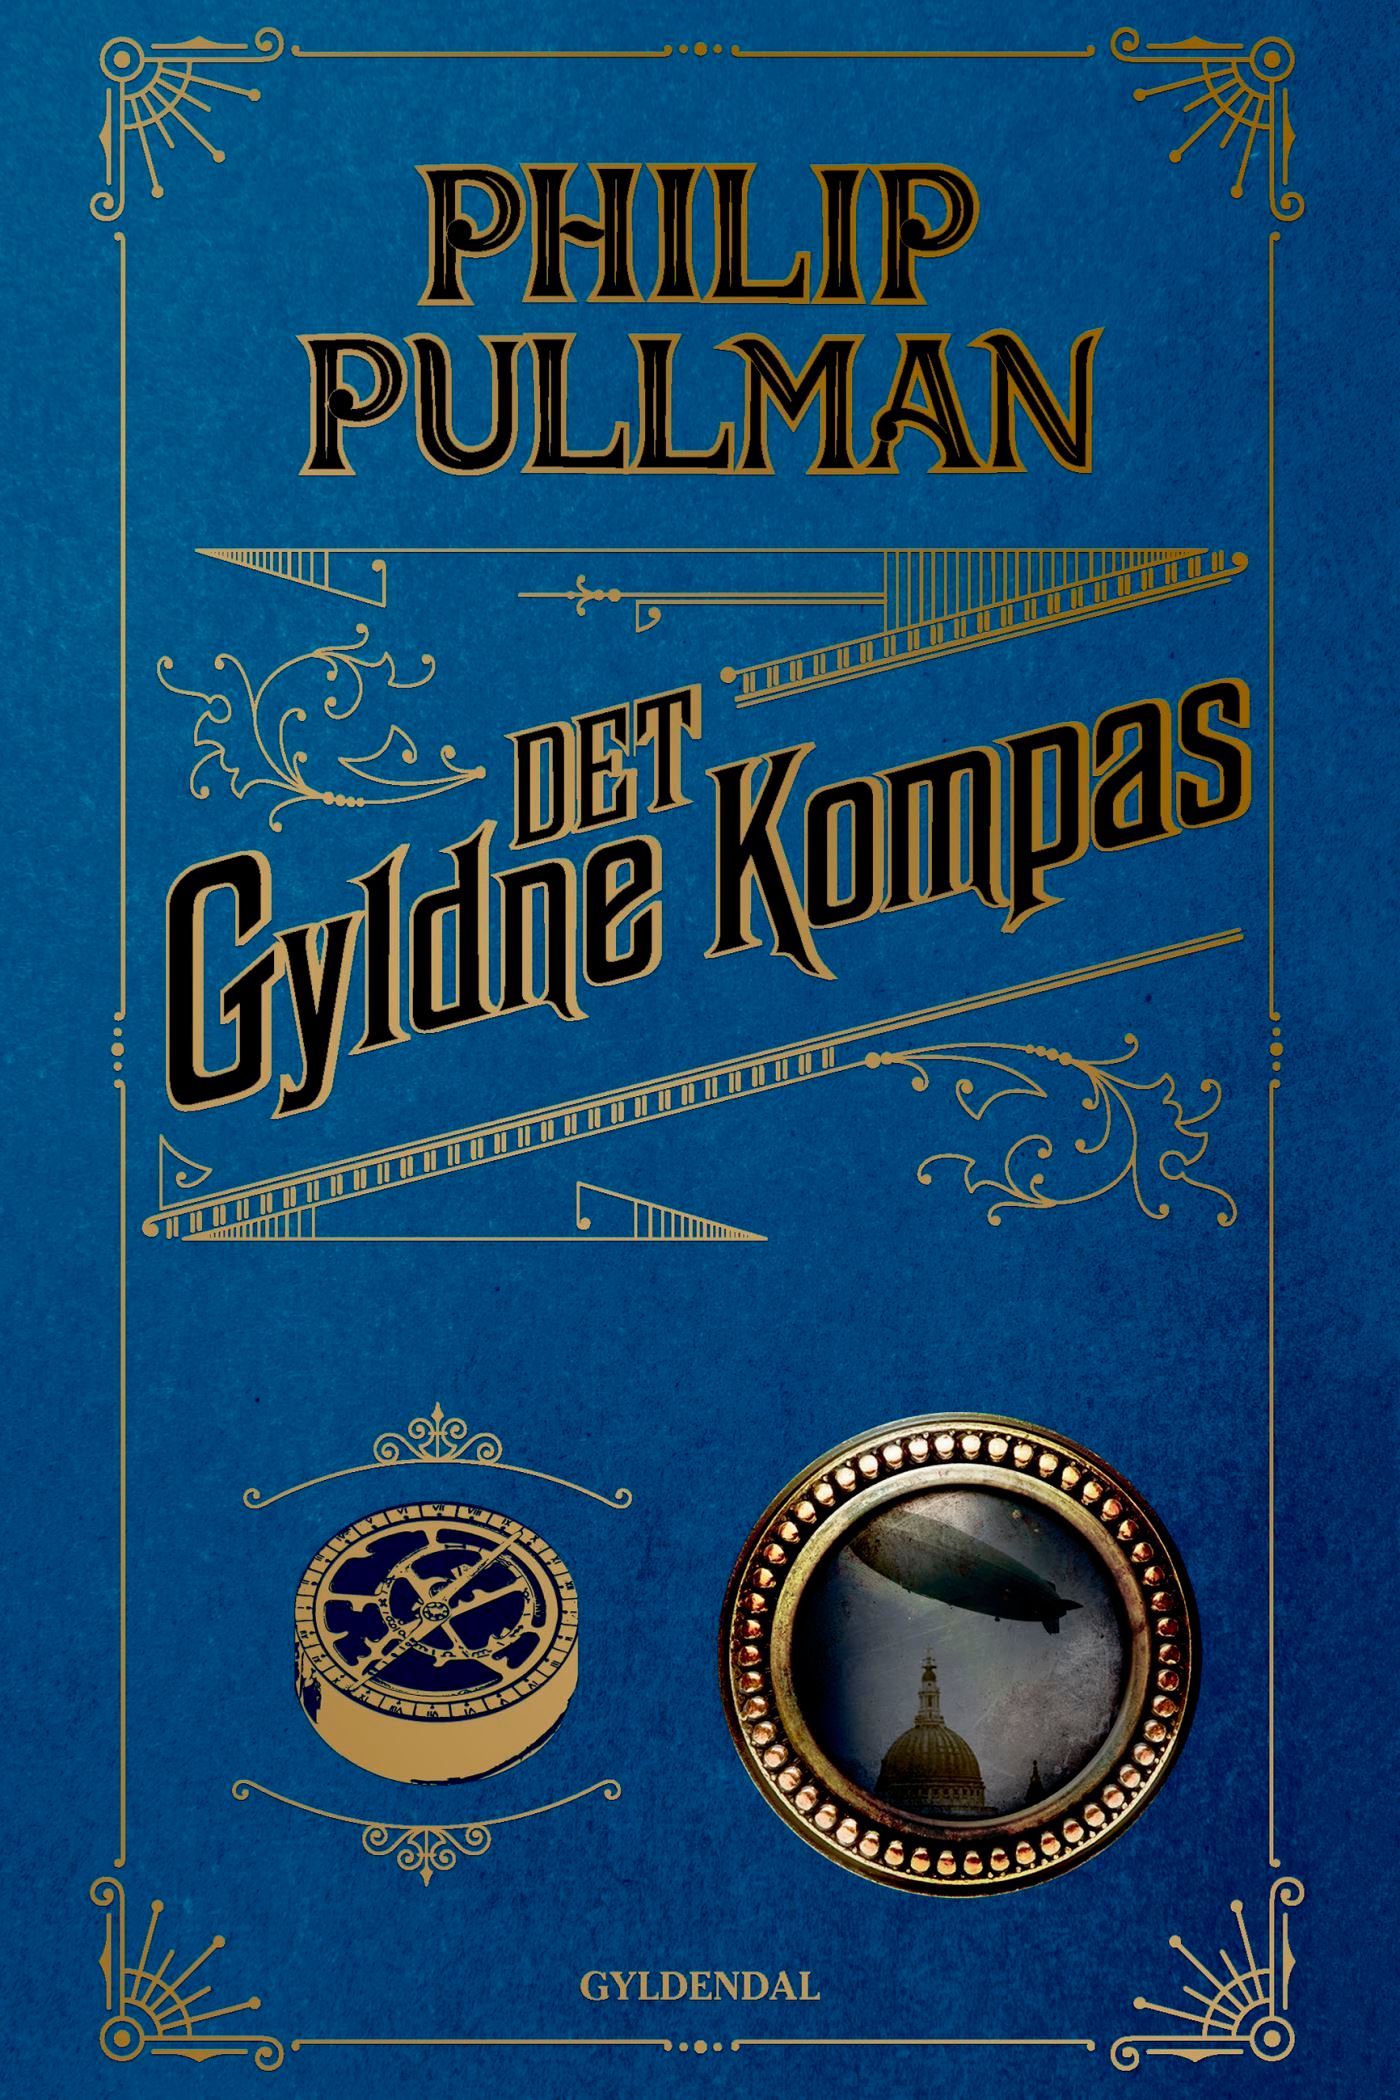 Det gyldne kompas, audiobook by Philip Pullman